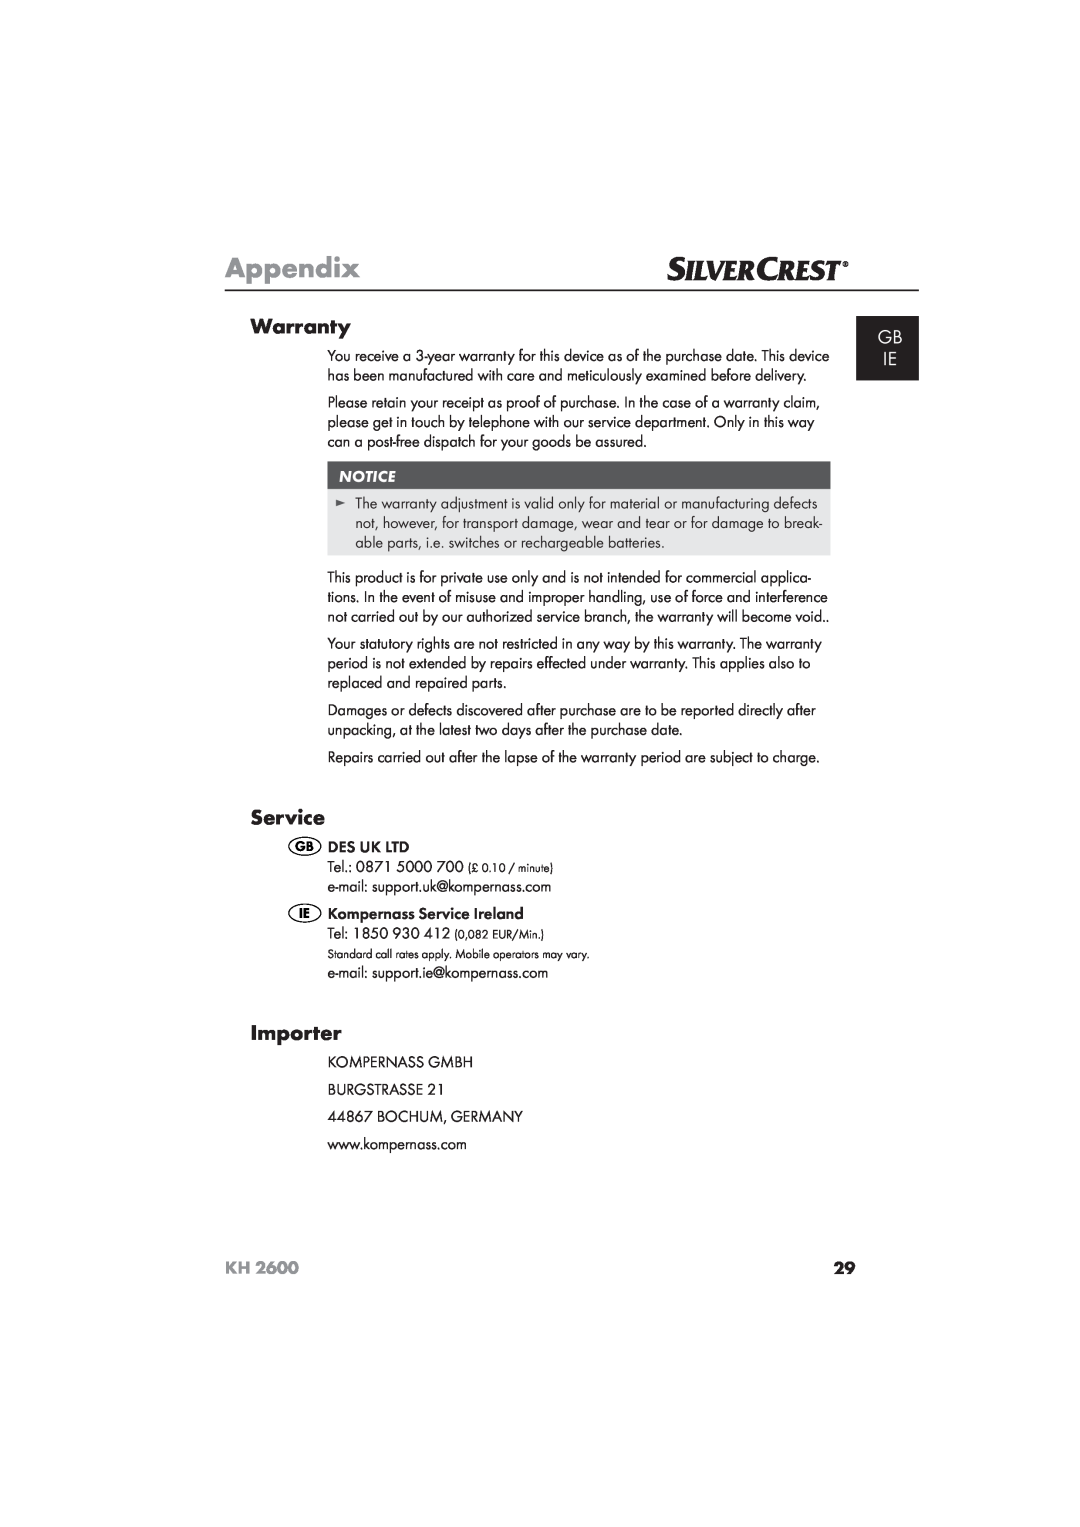 Silvercrest KH 2600 manual Warranty, Service, Importer, Appendix, Gb Ie 